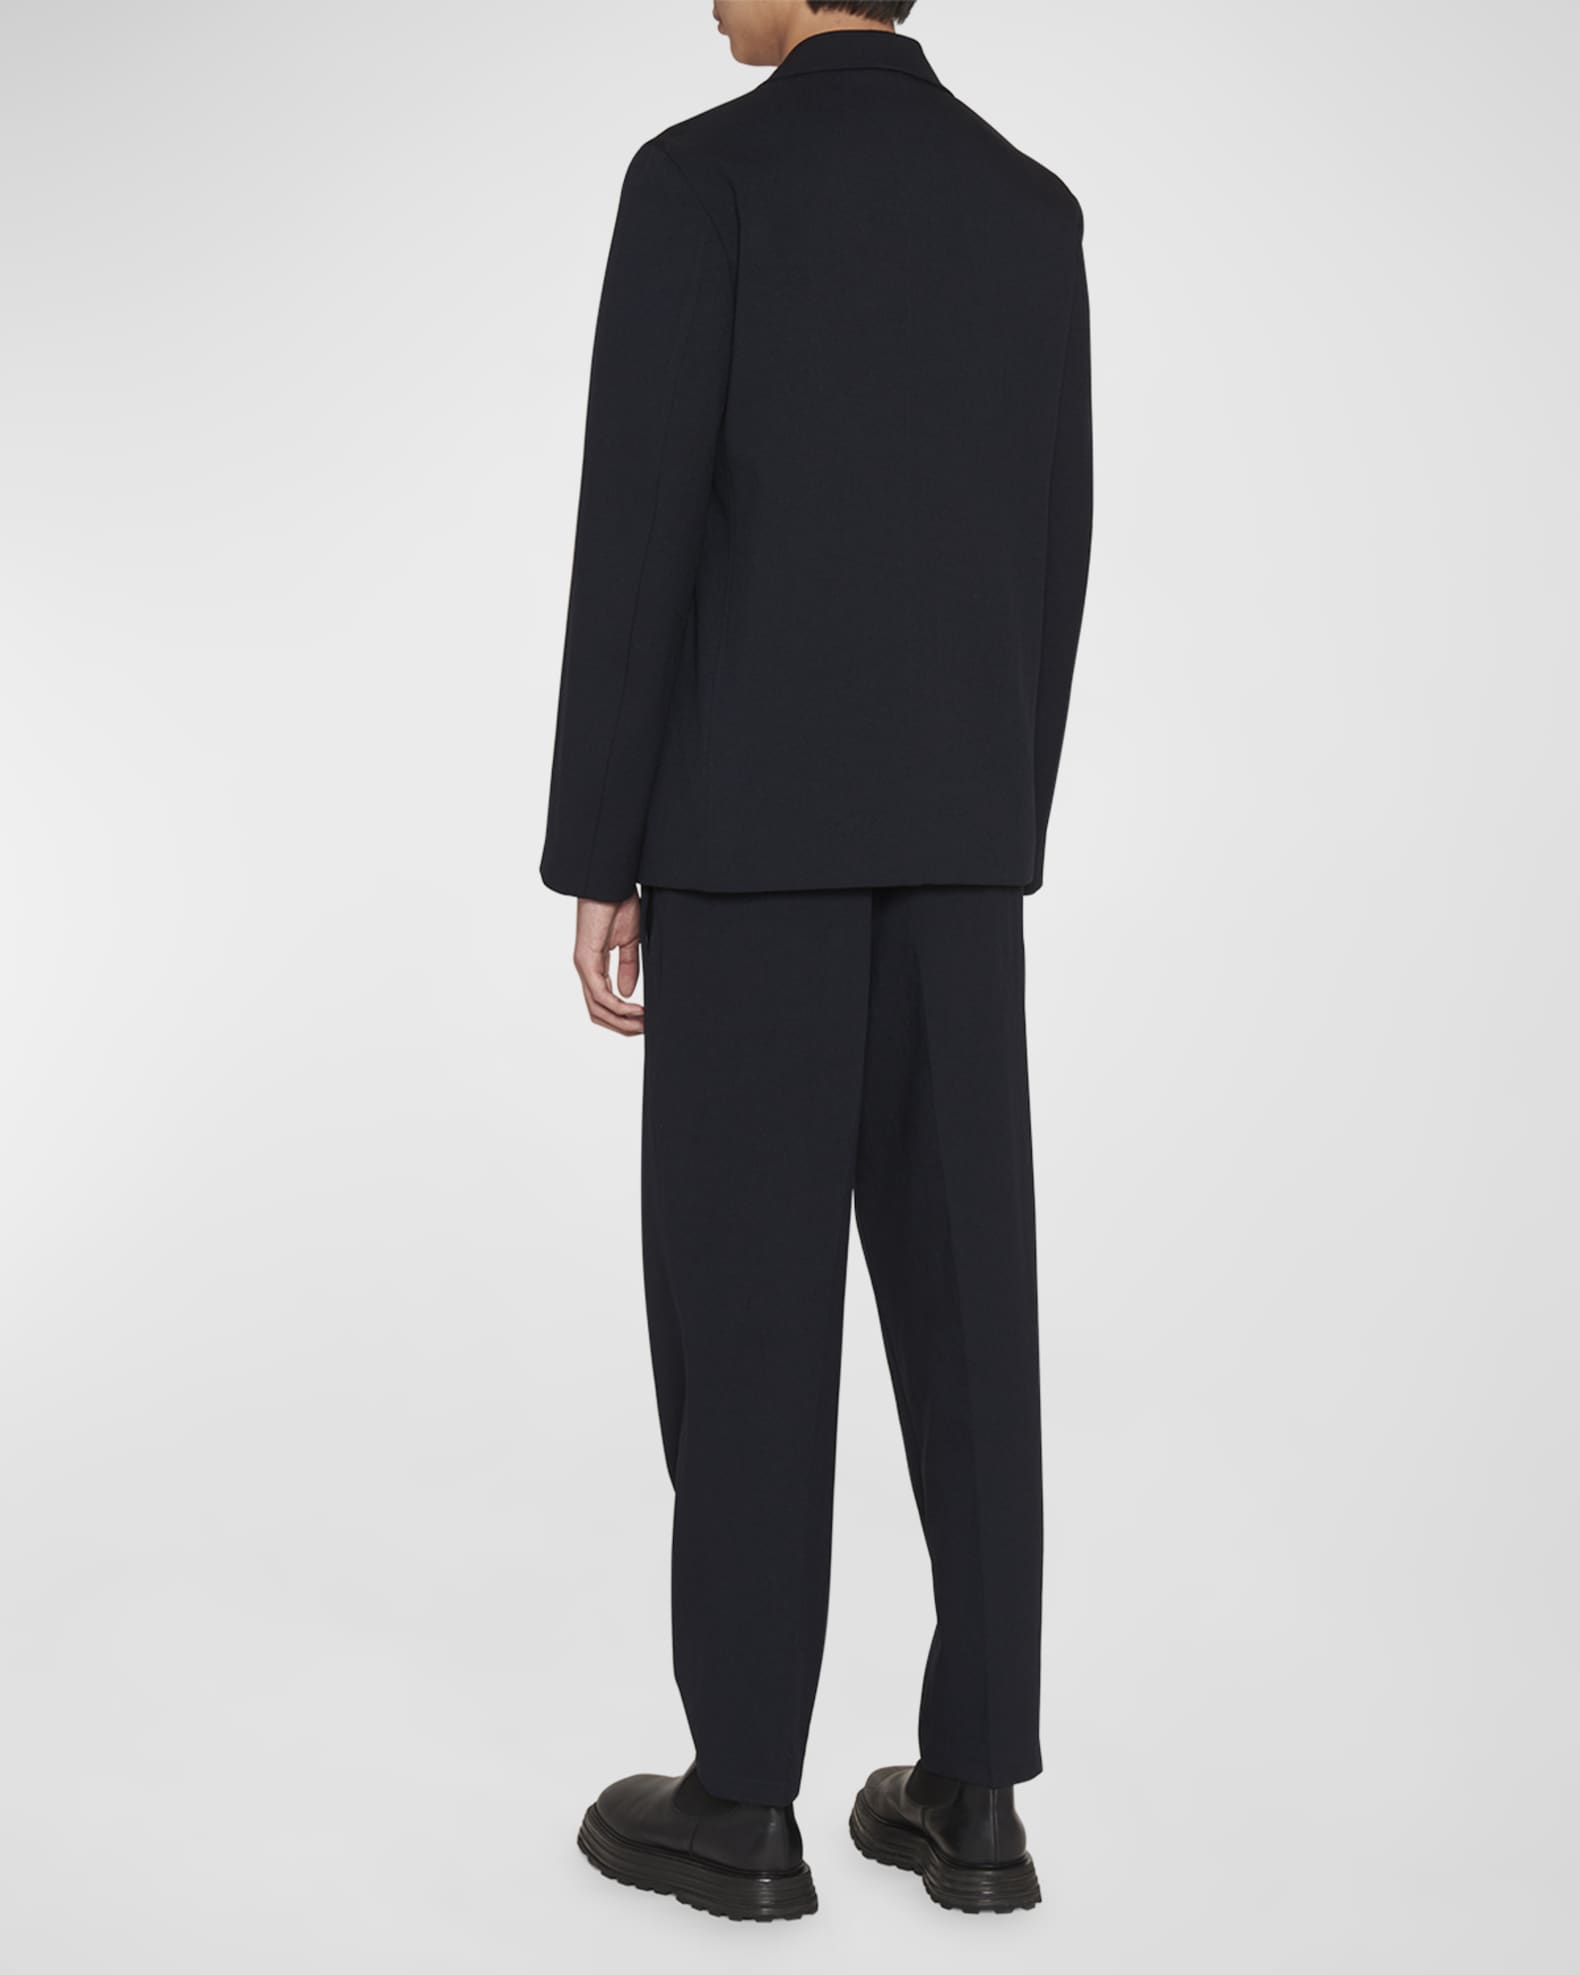 Jil Sander Men's Solid Suit Jacket | Neiman Marcus